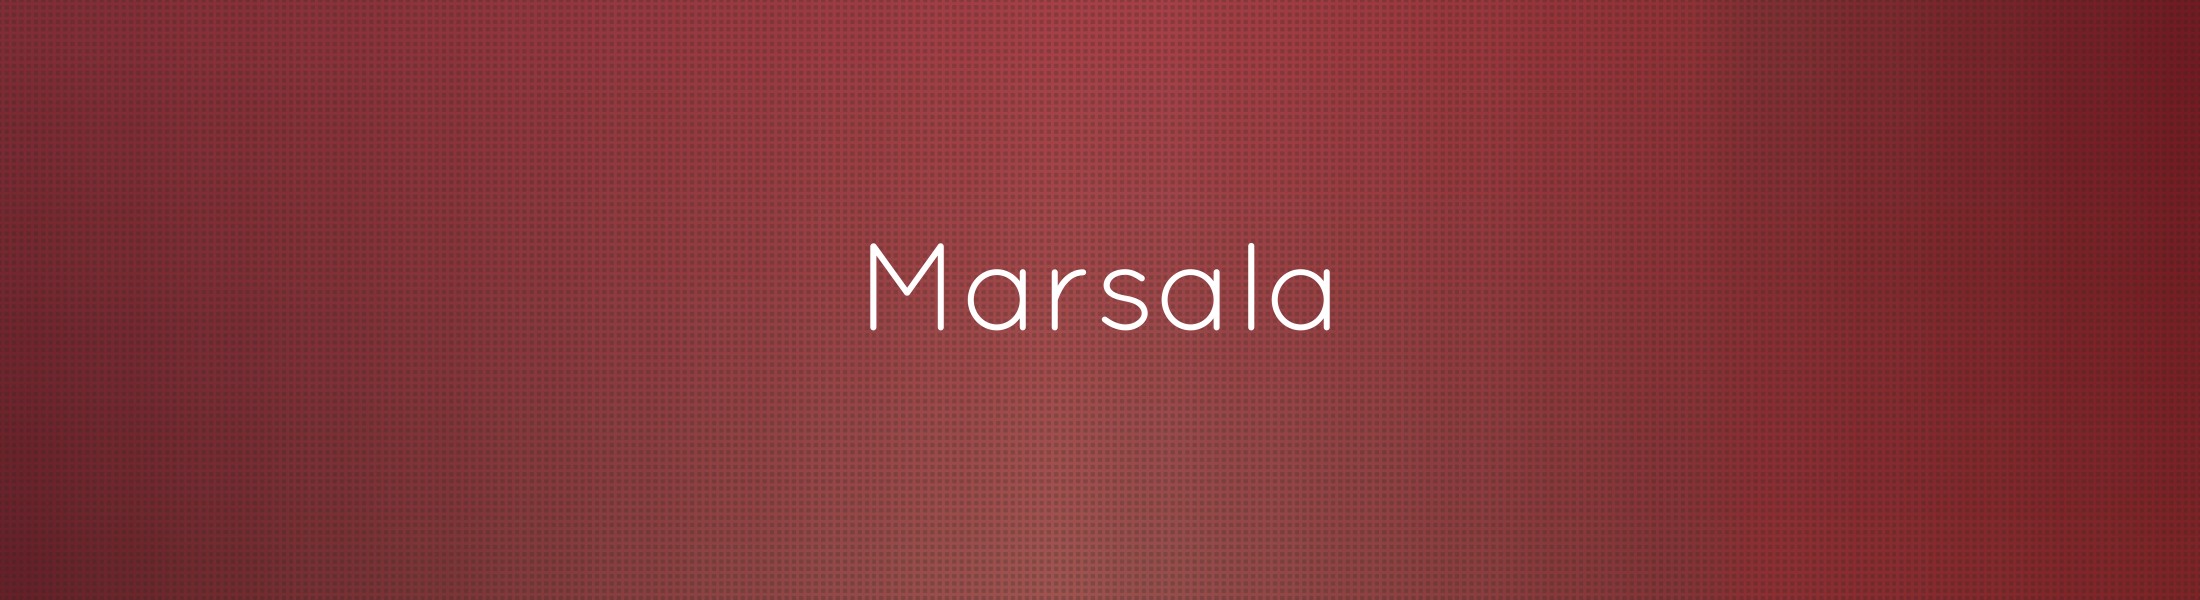 COY 2015 - Marsala